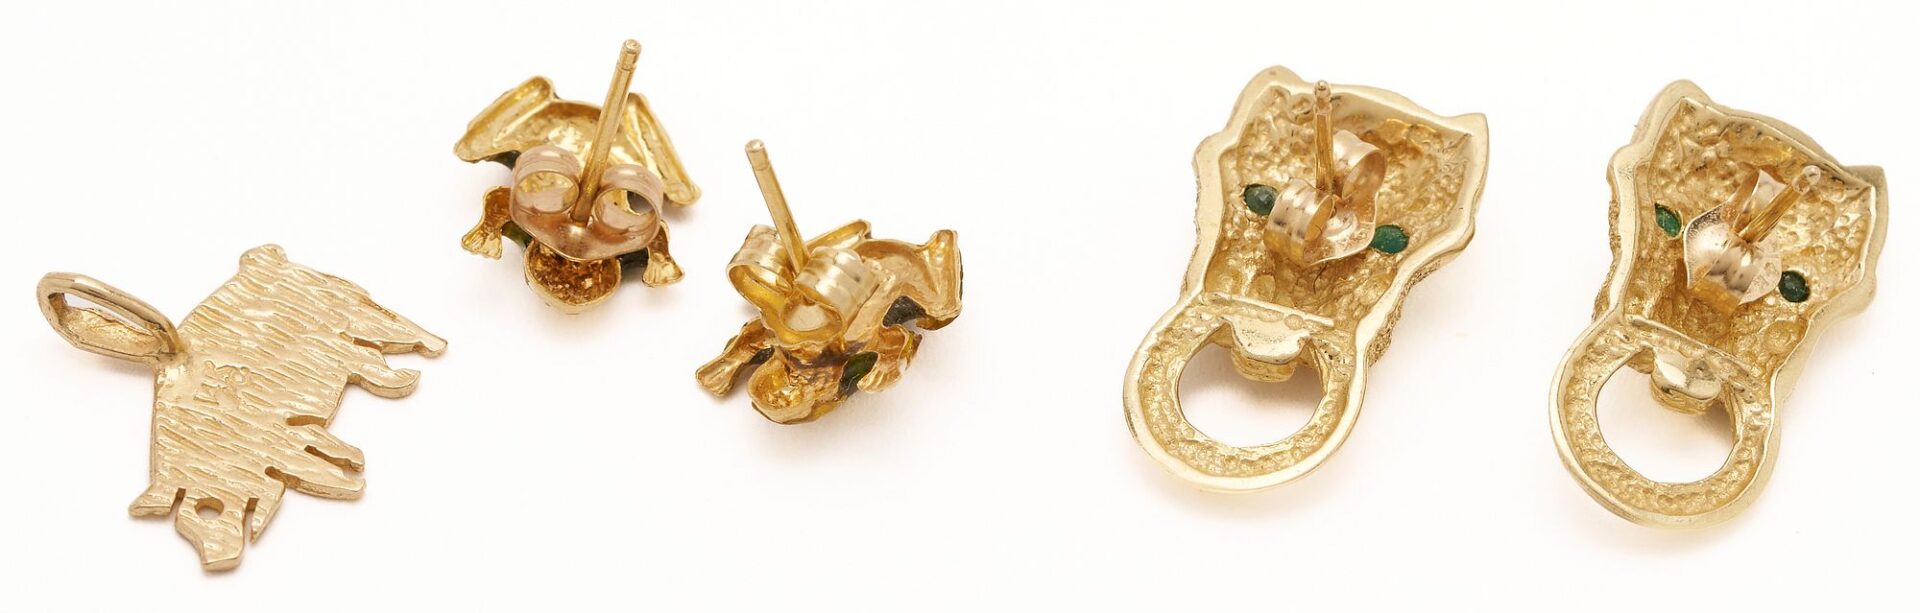 Lot 642: Gold & Gemstone Animal Jewelry, 6 items